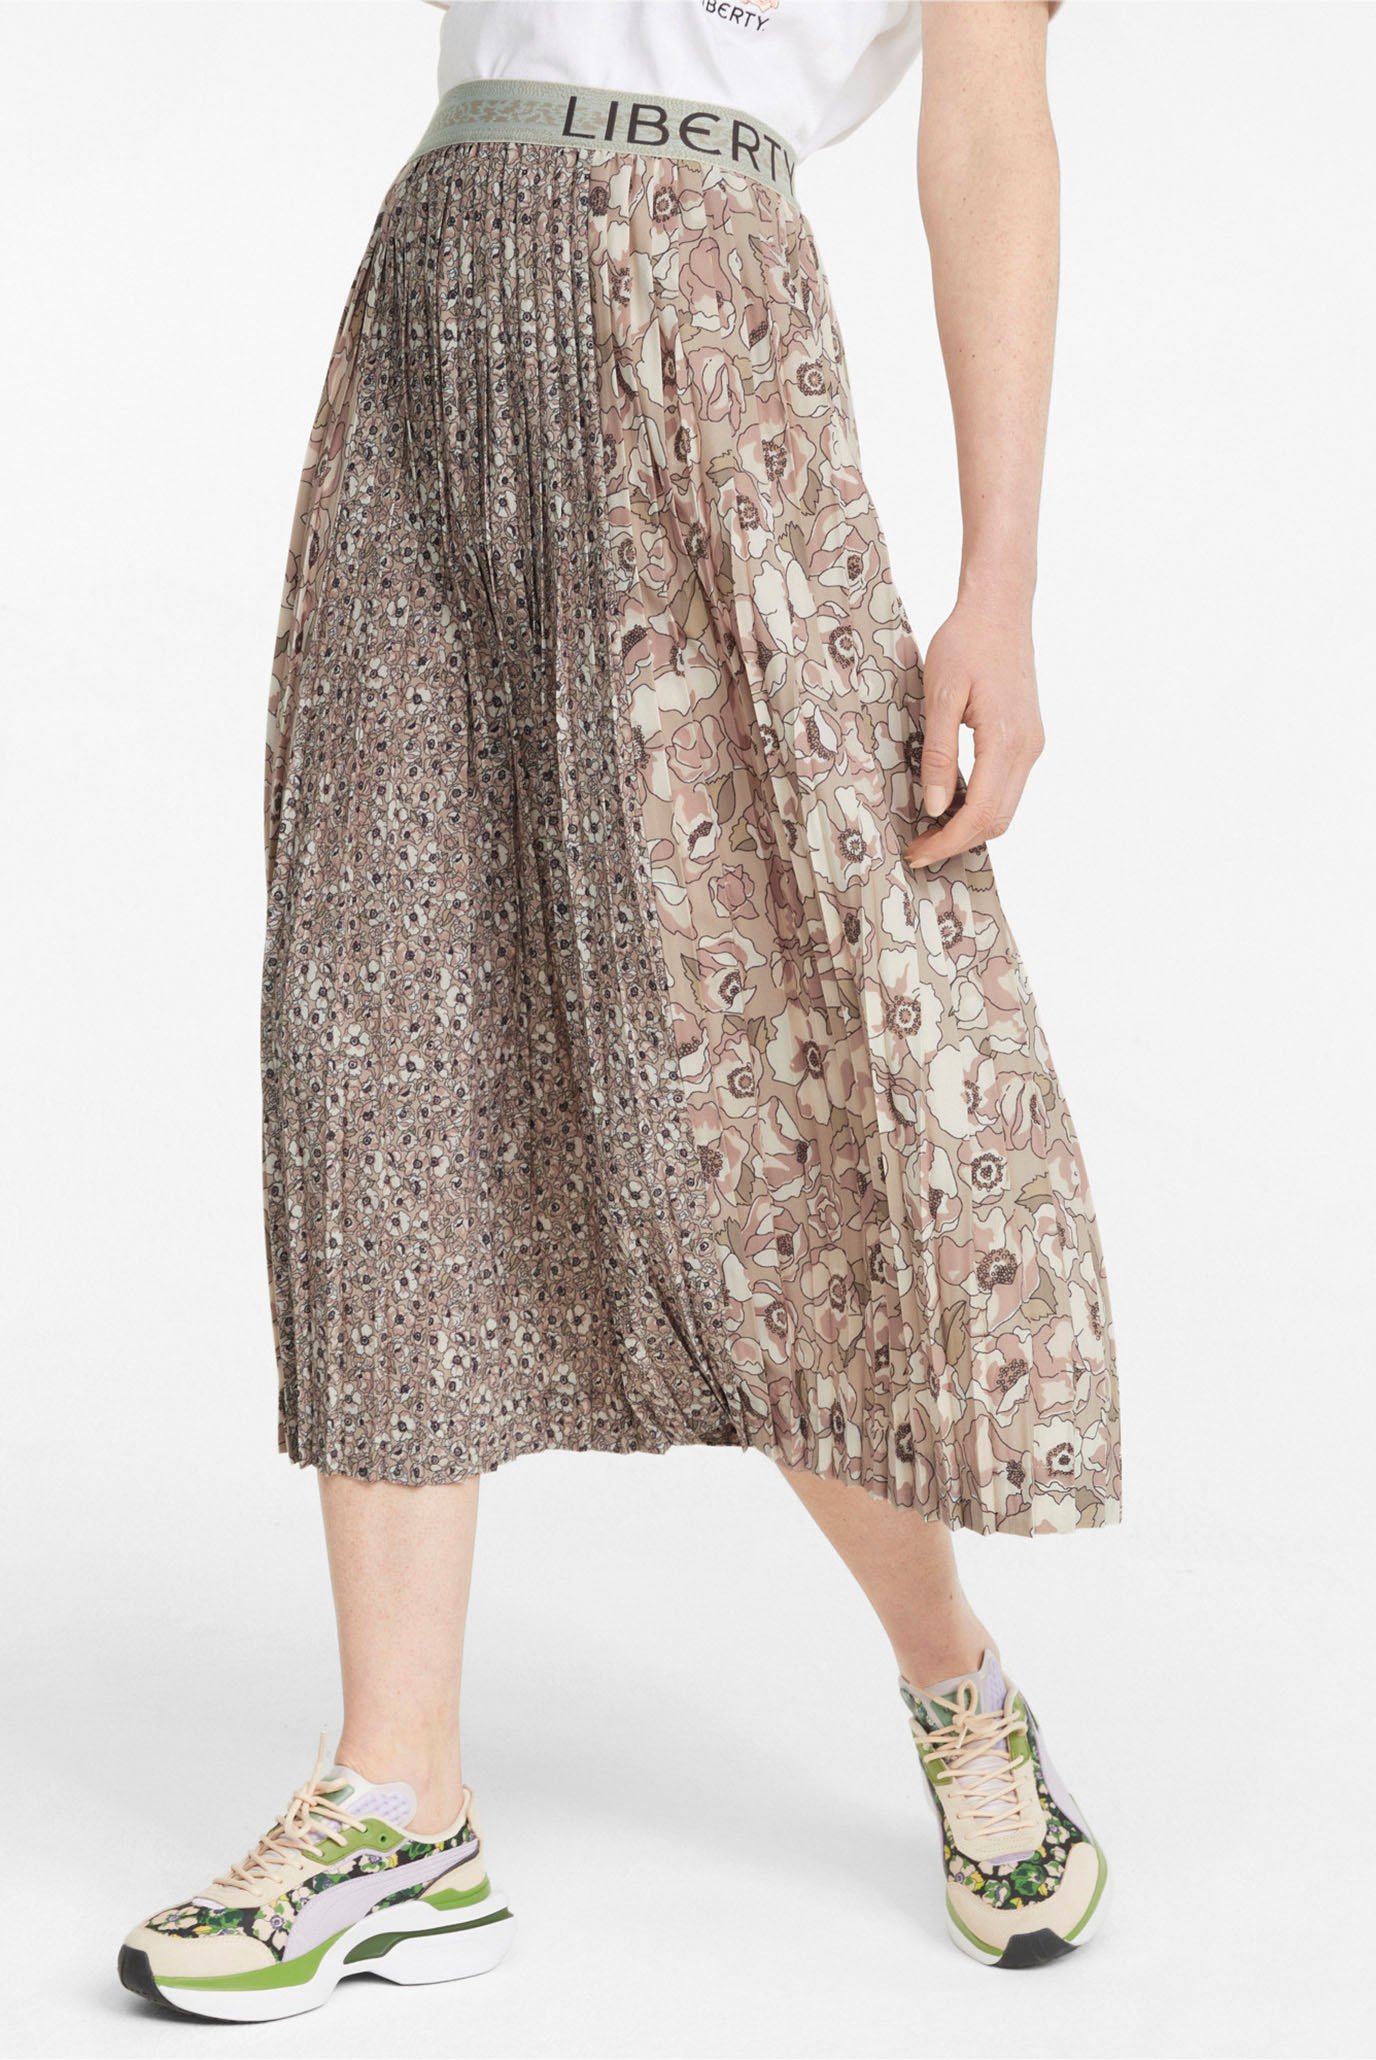 Женская бежевая юбка с узором PUMA x LIBERTY Printed Pleated Women's Skirt 1